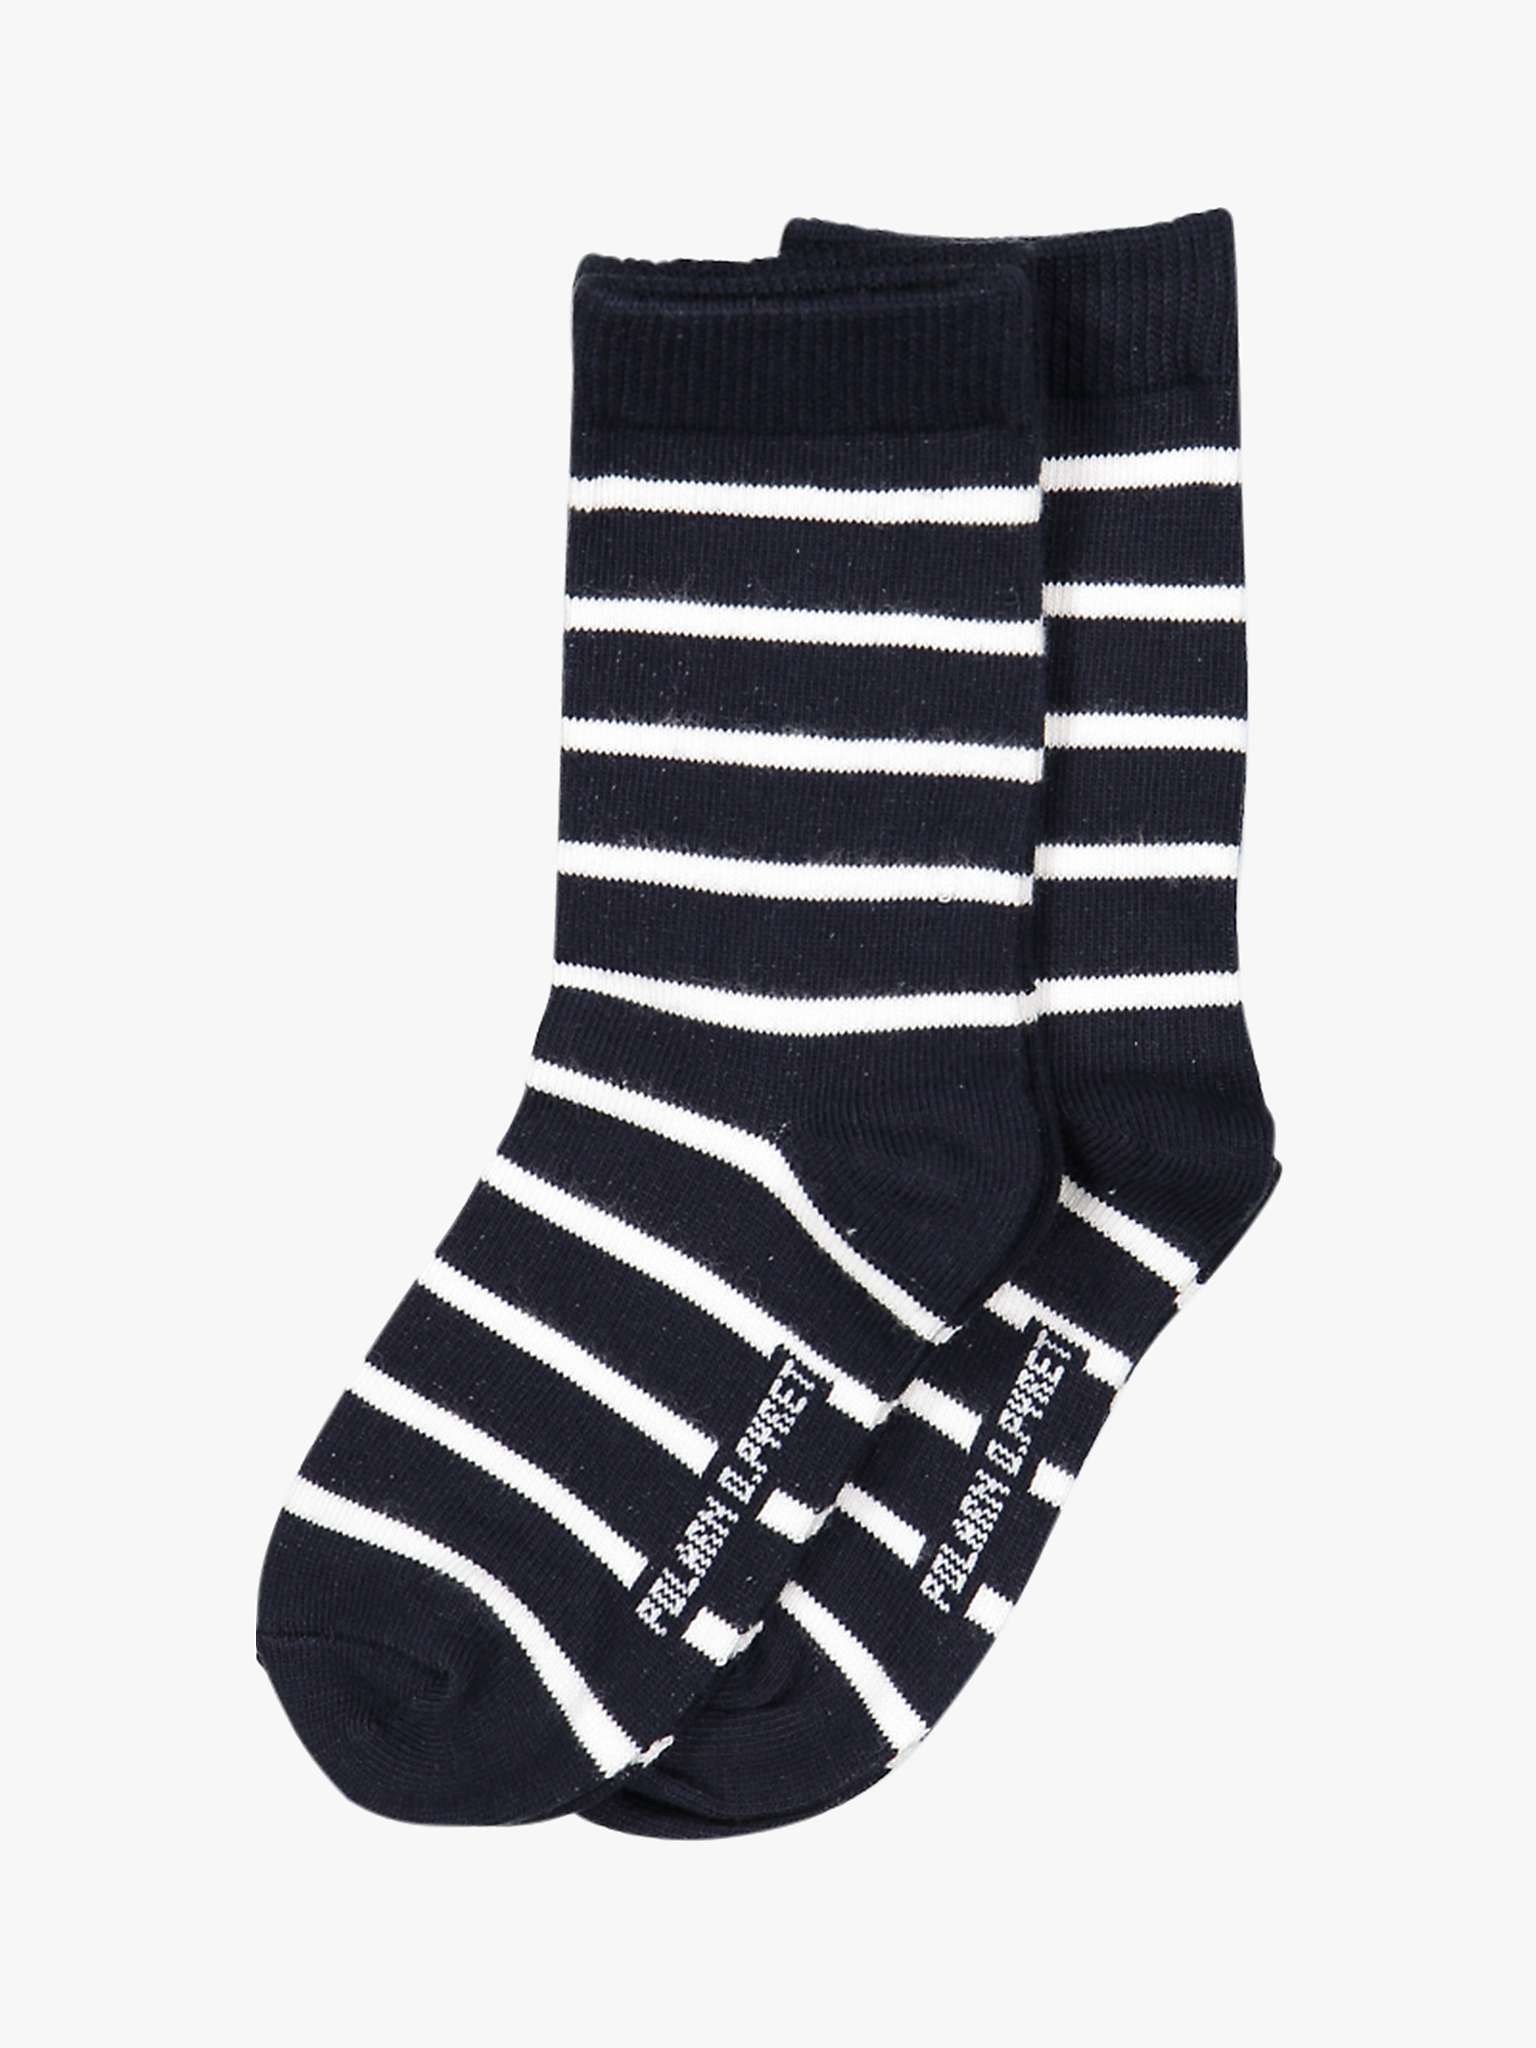 Buy Polarn O. Pyret Children's Stripe Socks, Pack of 2, Blue Online at johnlewis.com